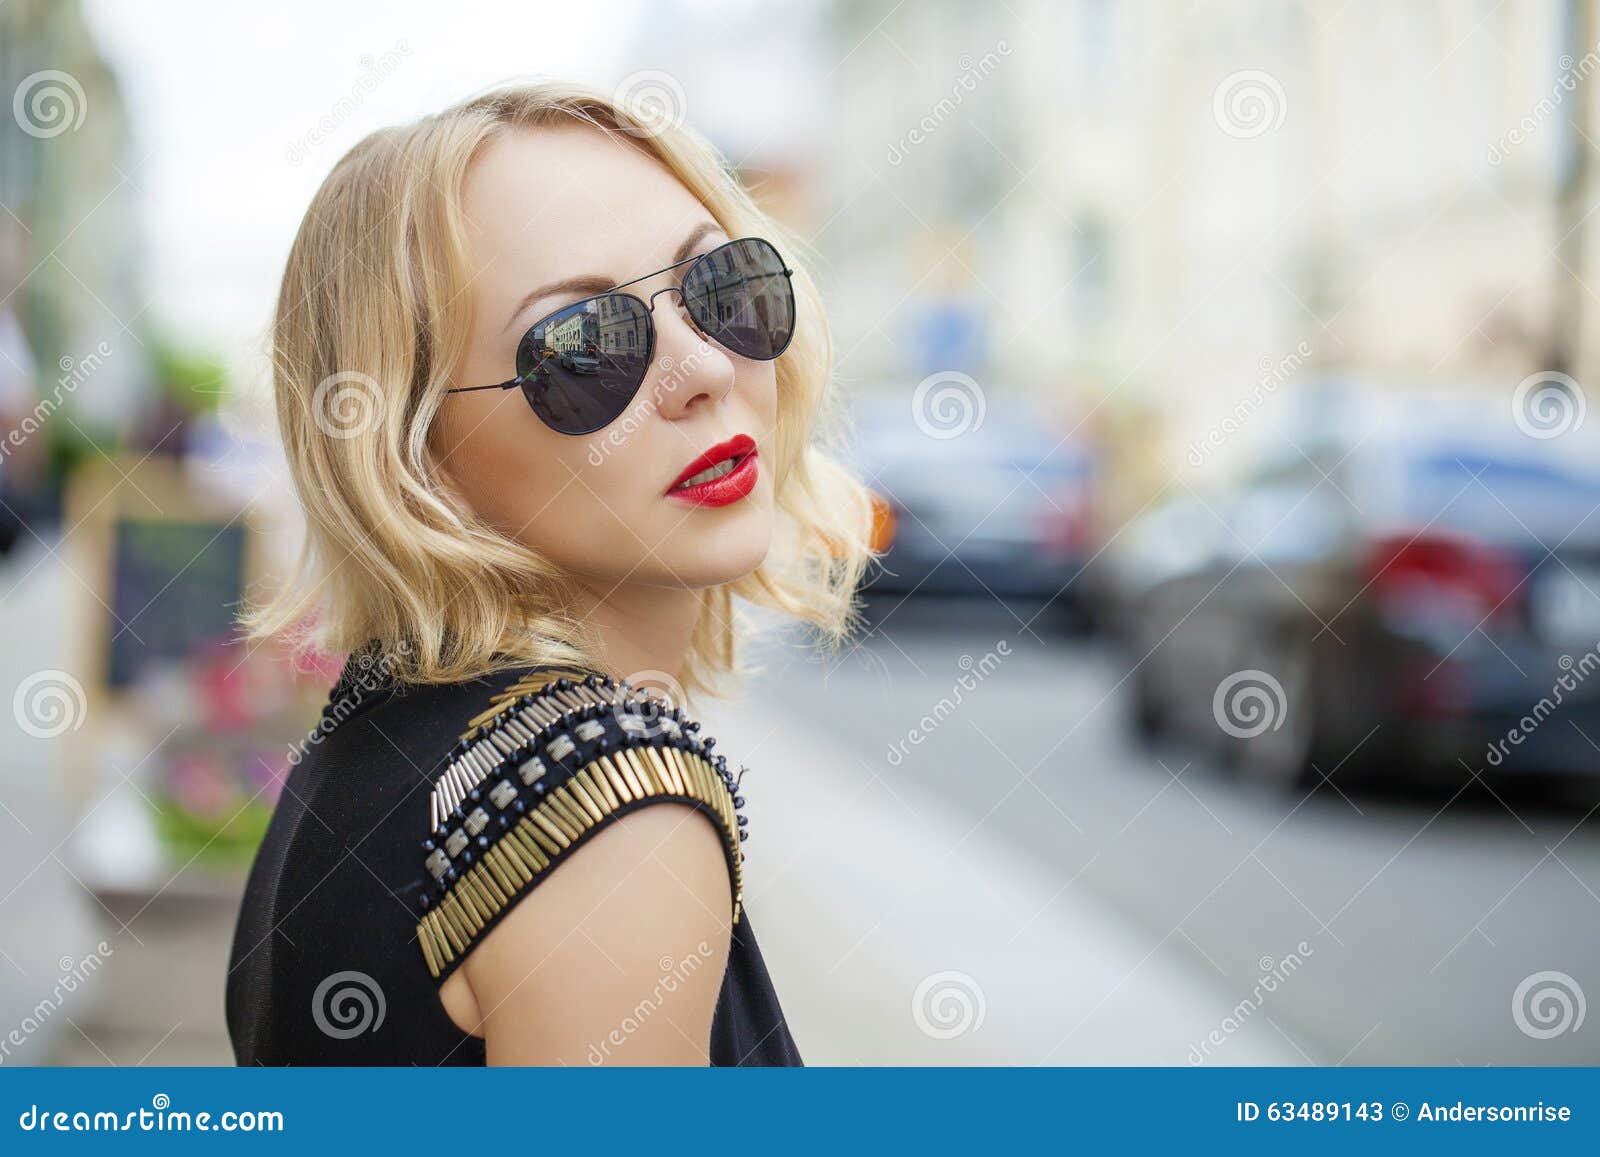 Beautiful Blonde Woman In Sunglasses Stock Image Image Of Adult Elegance 63489143 